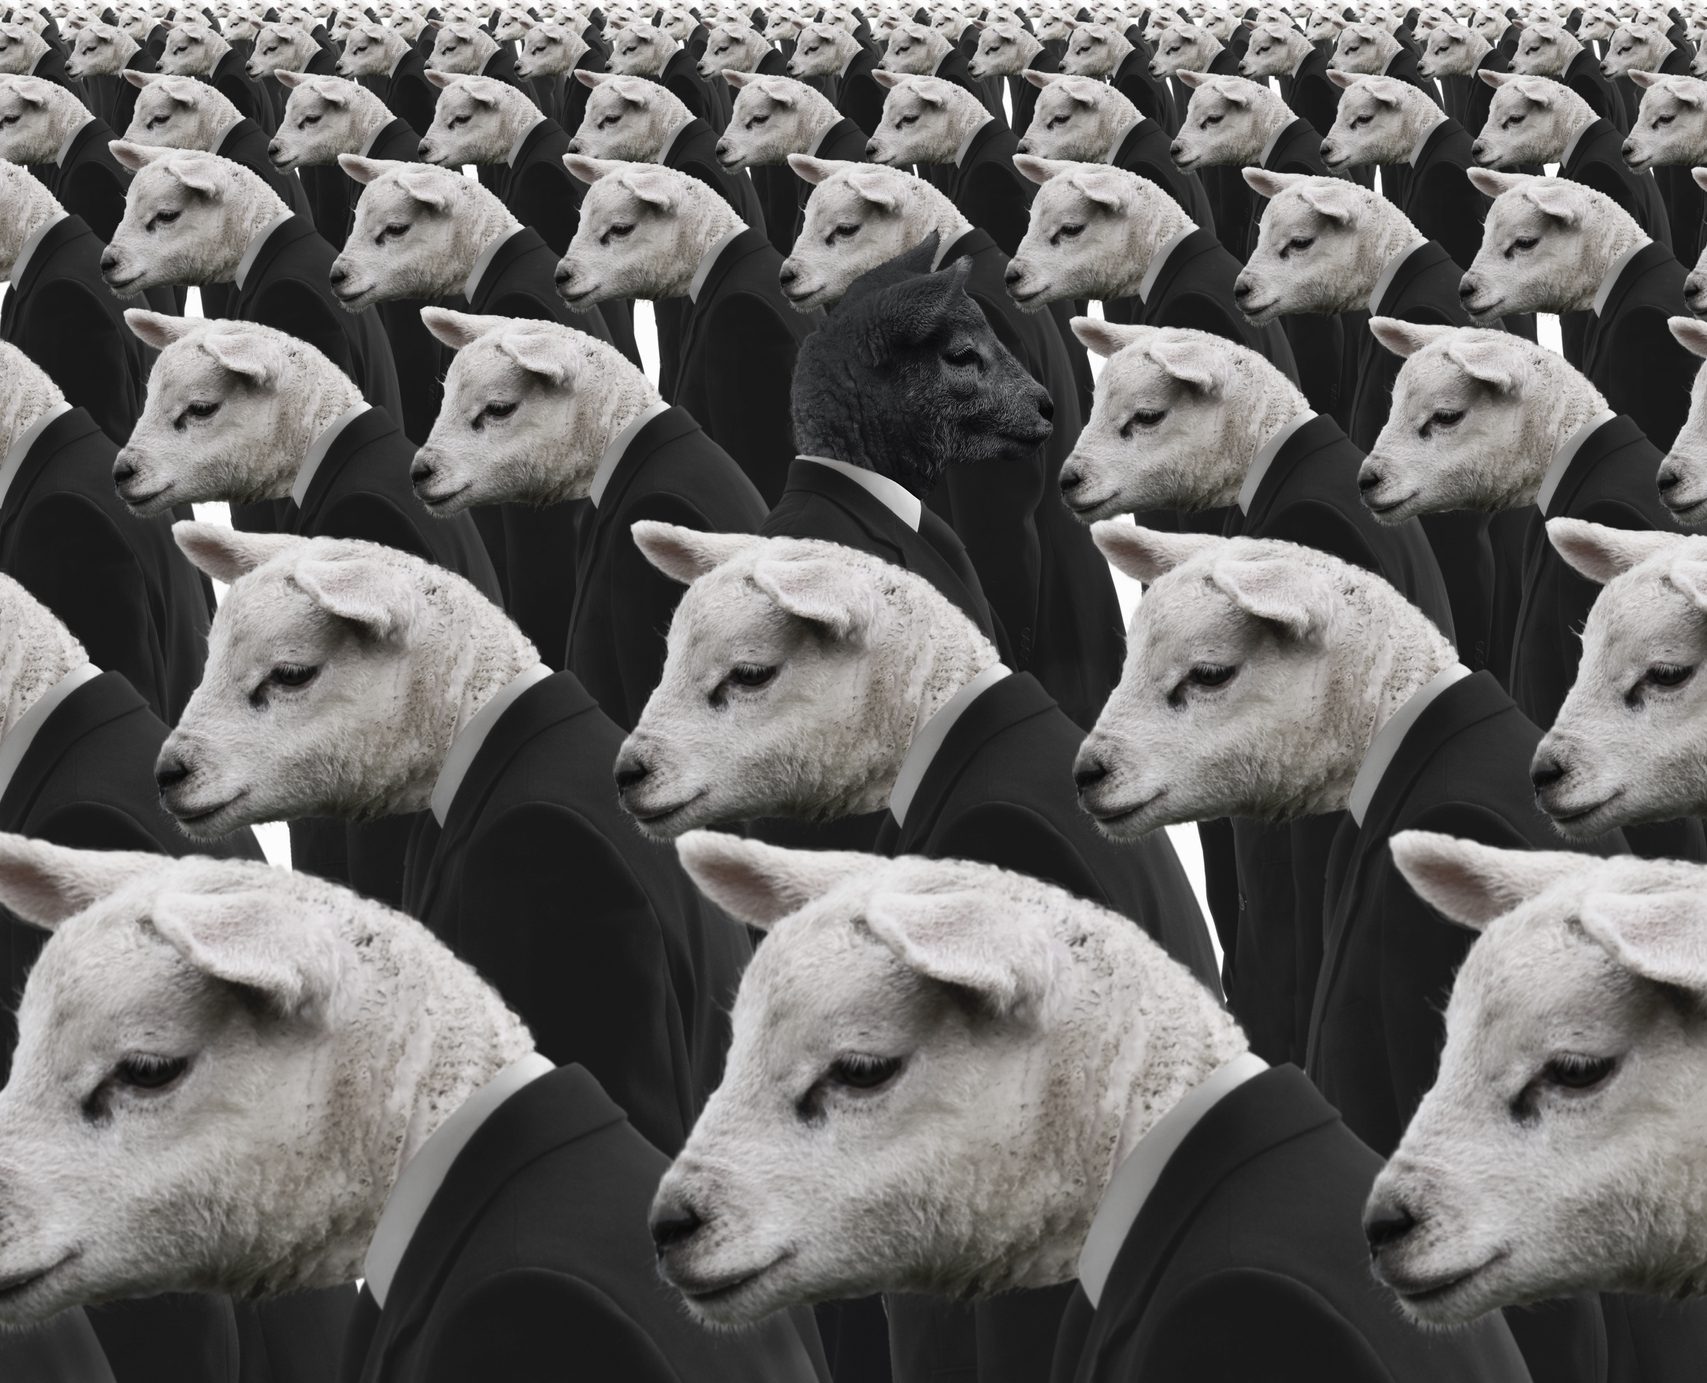 Black sheep amongst white sheep businessmen